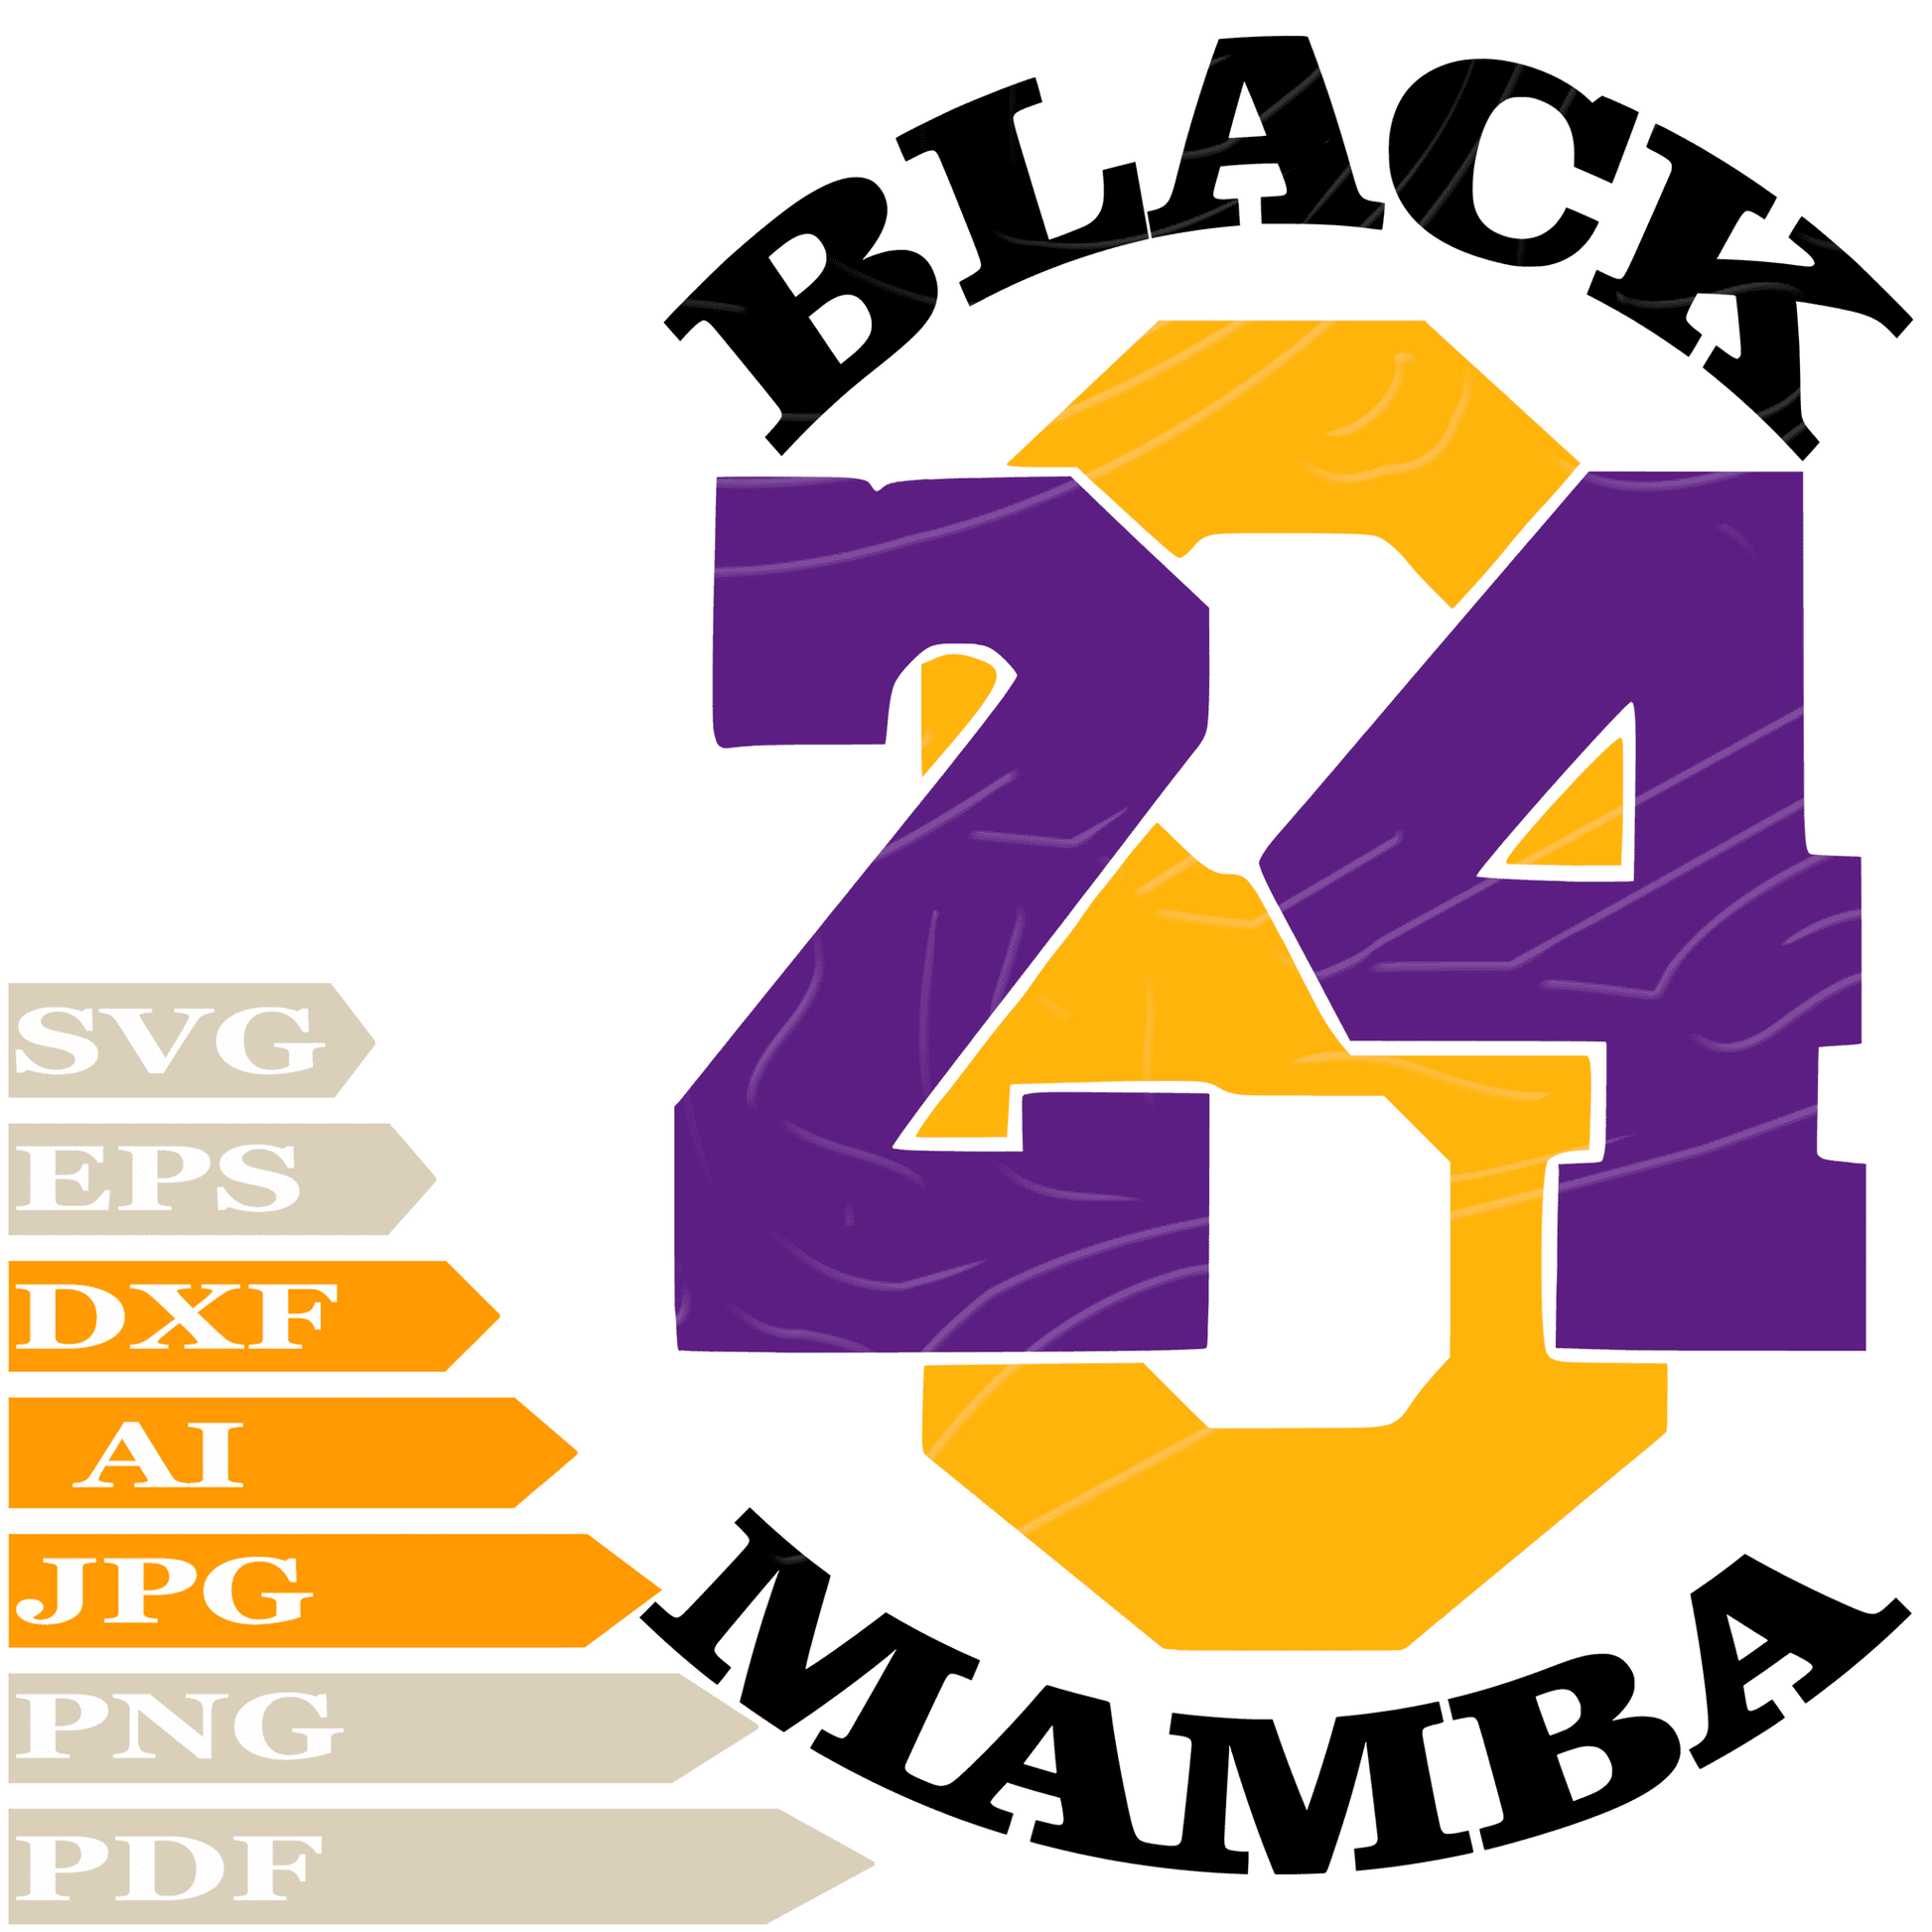 Kobe Bryant SVG File, black Mamba Logo SVG Design, Los Angeles Lakers Player SVG, Kobe Bryant 24 Vector, Black Mamba PNG, Image Cut, For Cricut, Clipart, Cut File, Print, Digital Download, T-Shirt, Silhouette